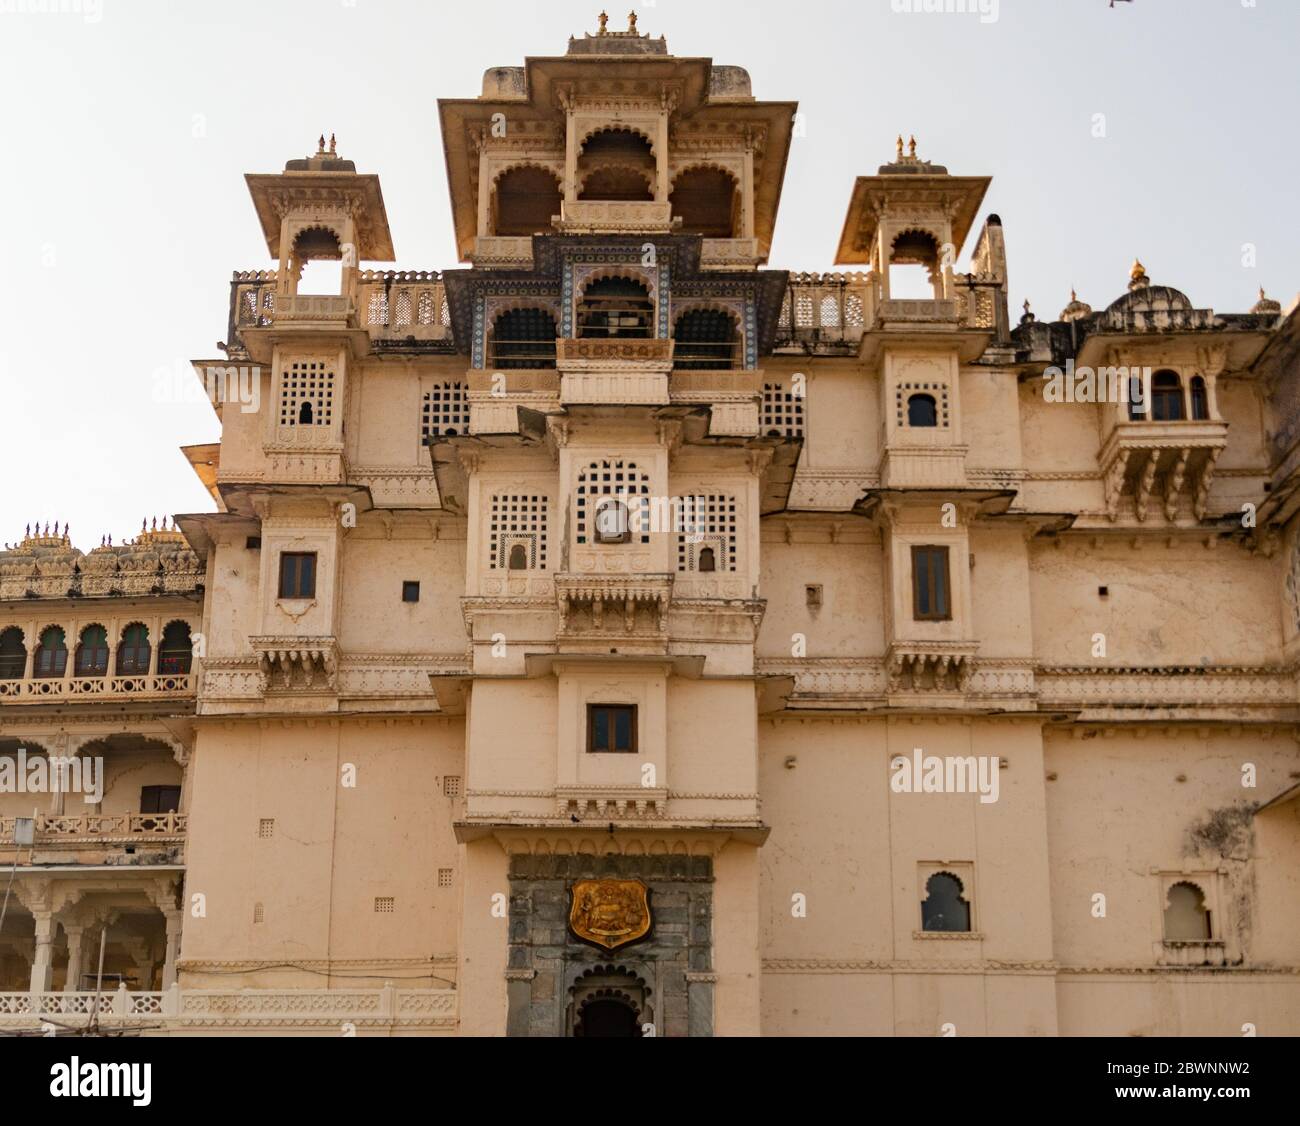 City Palace Haupteingang, Udaipur Rajasthan Indien. Hochwertige Fotos Stockfoto